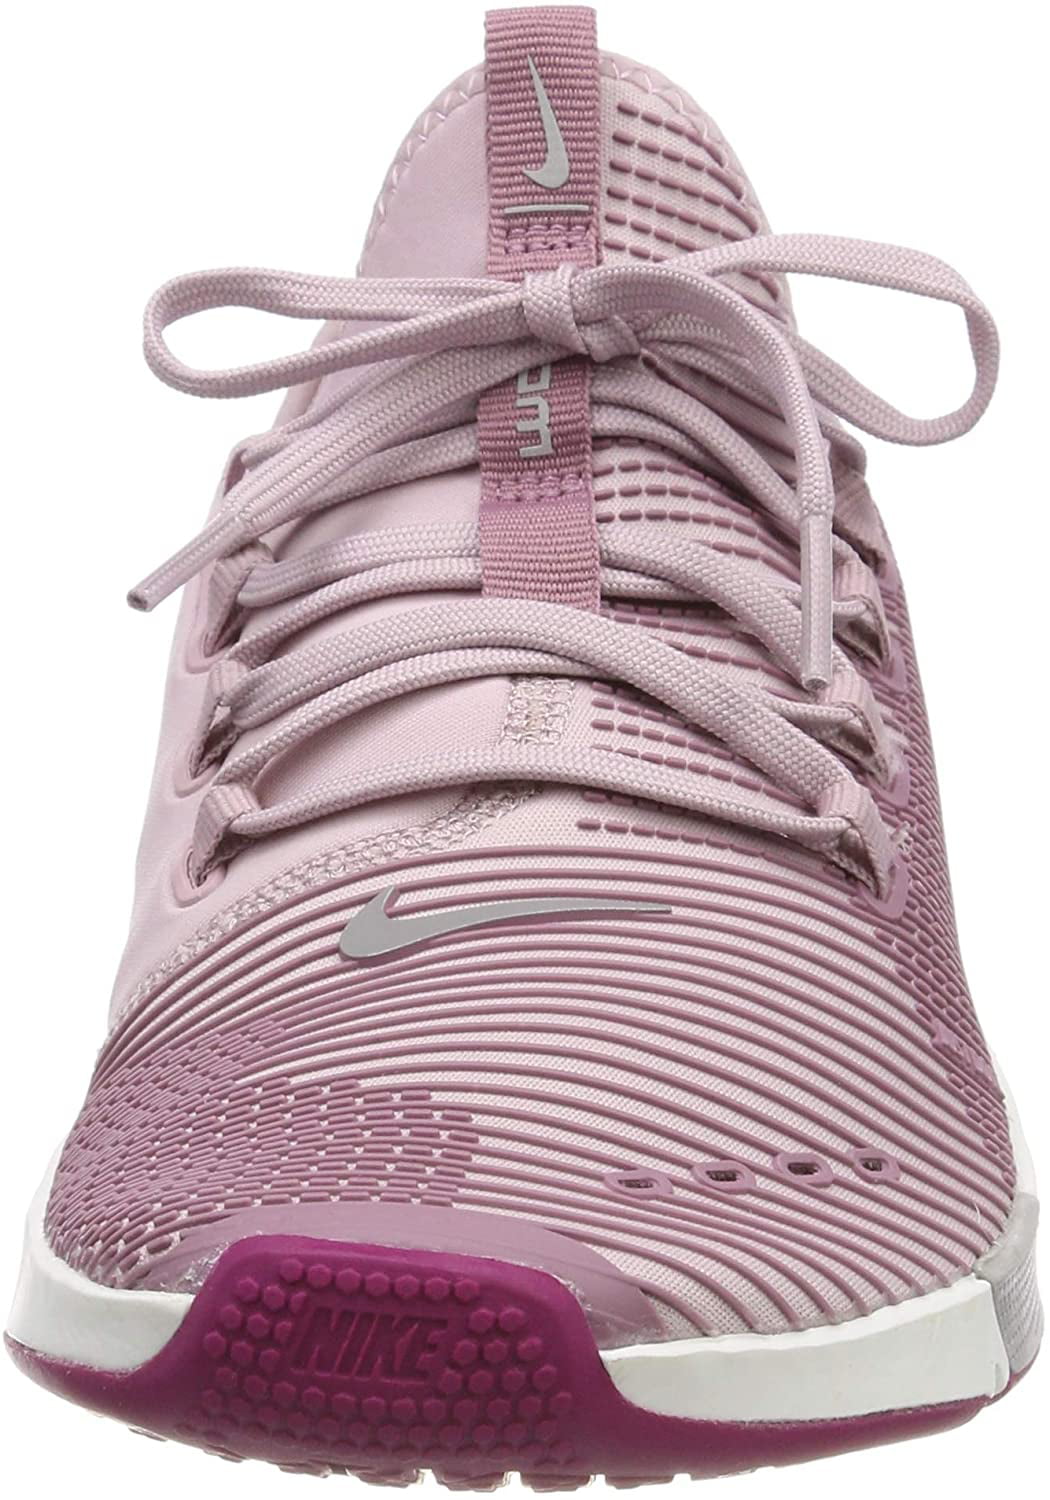 Nike Women's Air Zoom Elevate Running Shoes (Plum Grey, 8.5) - Walmart.com